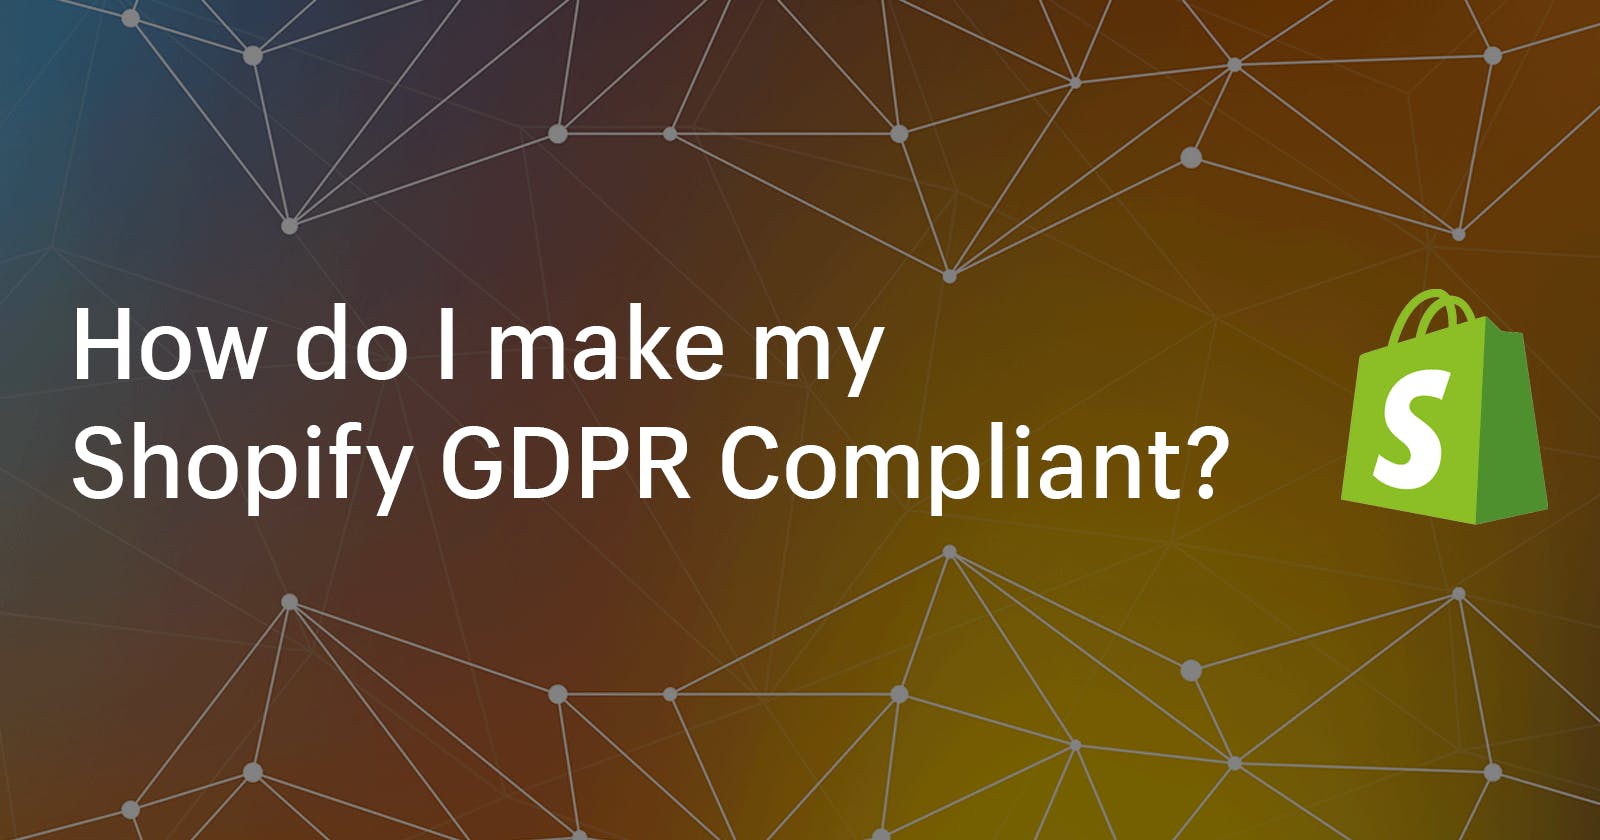 How do I make my Shopify GDPR Compliant?